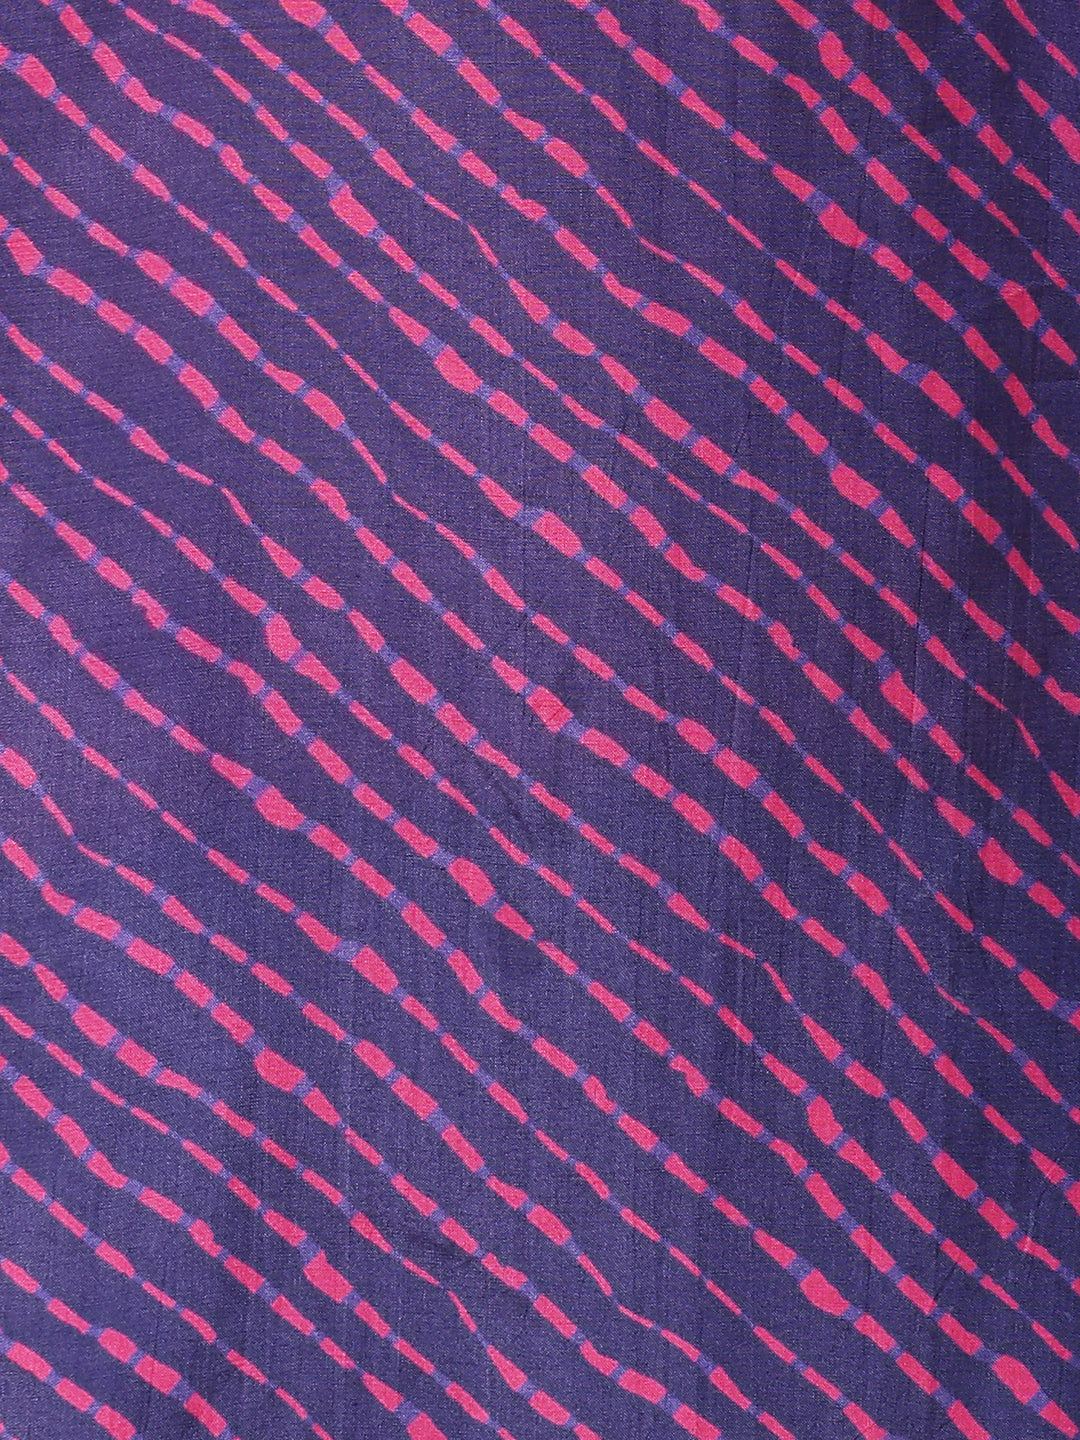 Leheriya Printed & Hand Embroidered Straight Kurta with Pant & Dupatta - Purple